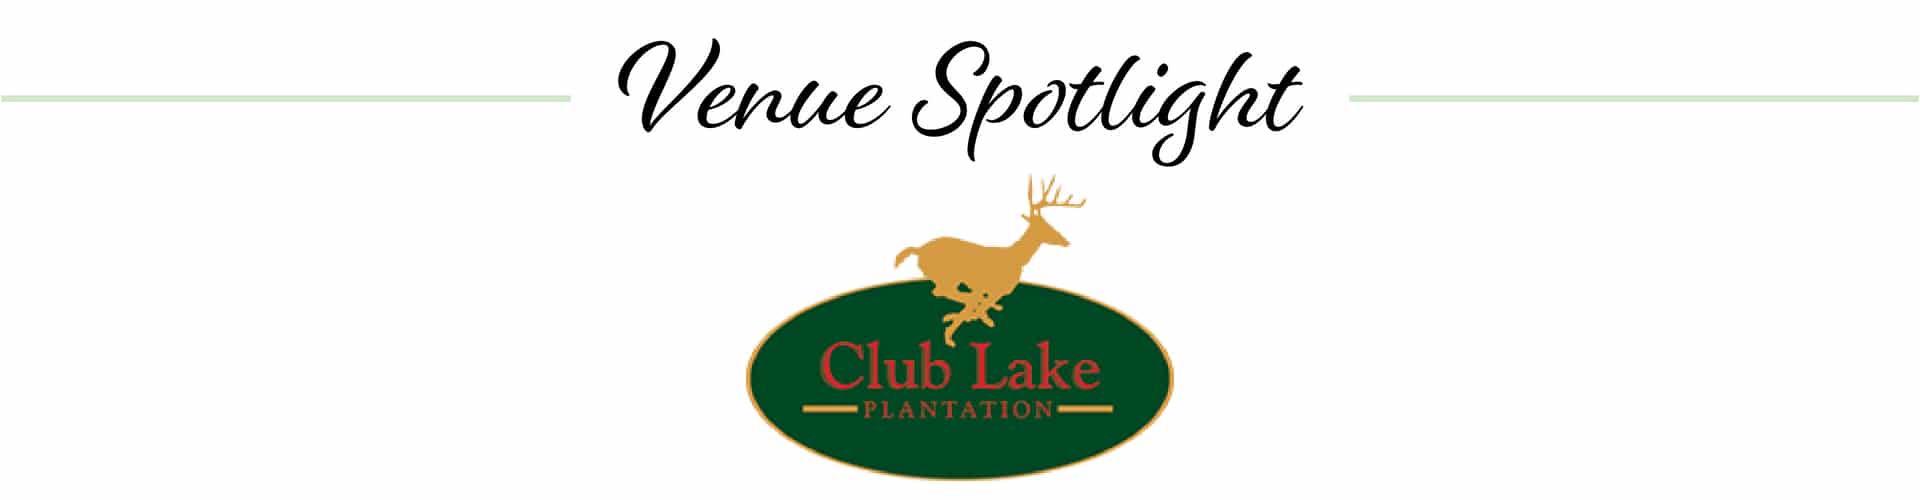 Club Lake Plantation - Orlando Wedding Venue Spotlight